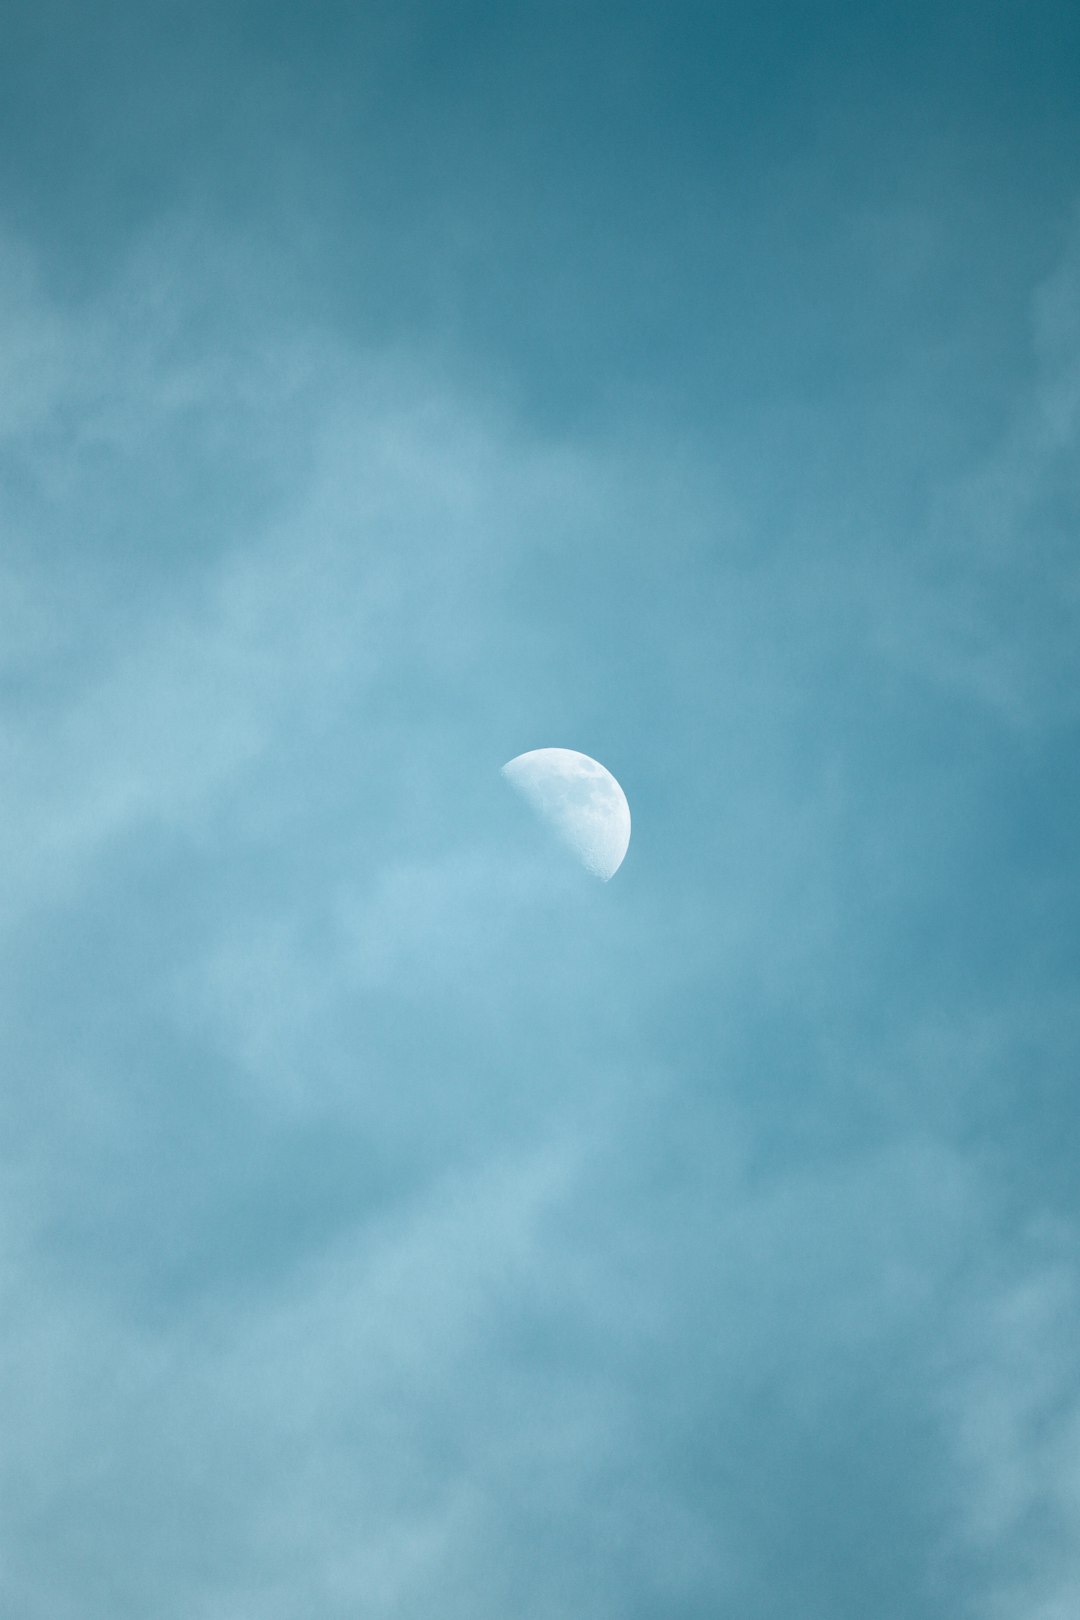 white moon in blue sky